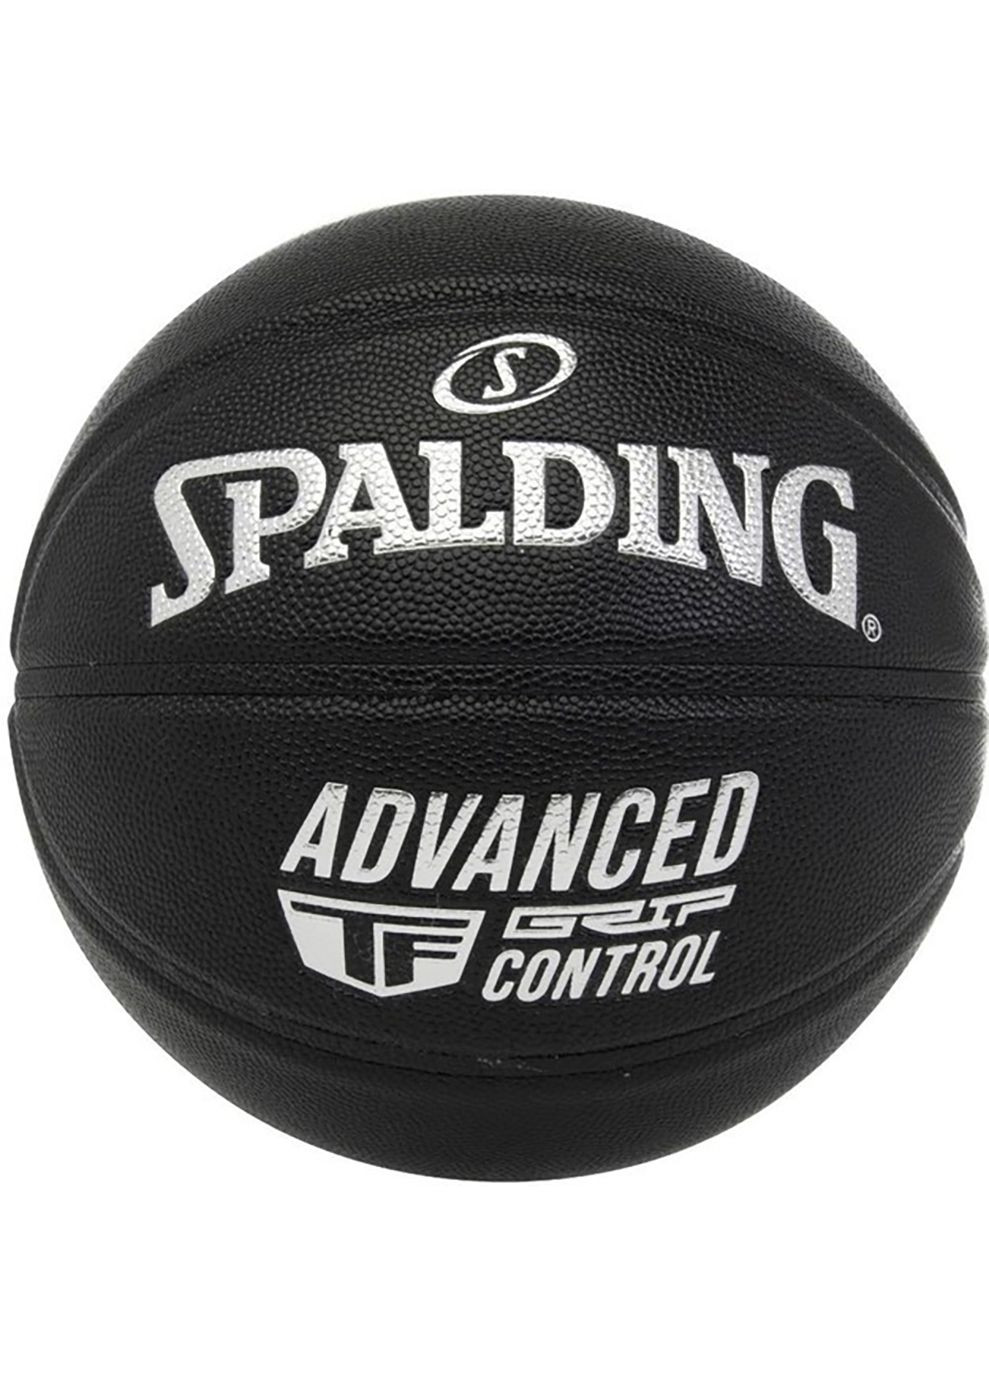 М'яч баскетбольний Advanced Grip Control чорний Уні 7 Spalding (268831831)